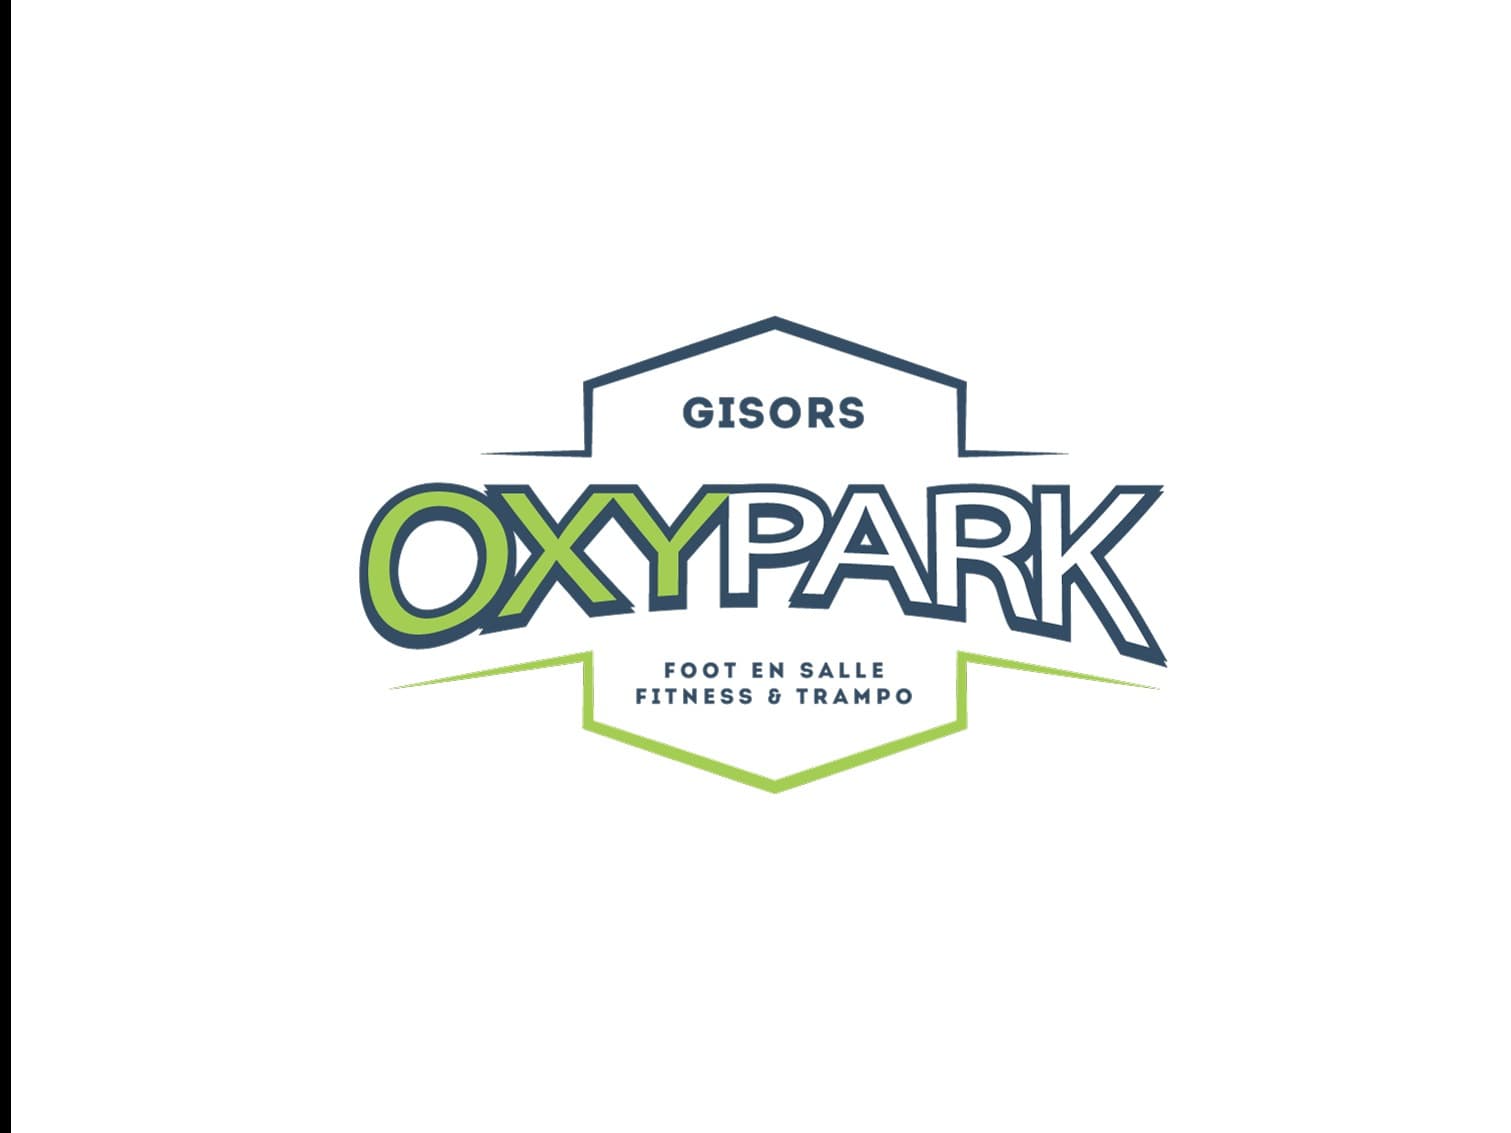 Oxypark Gisors